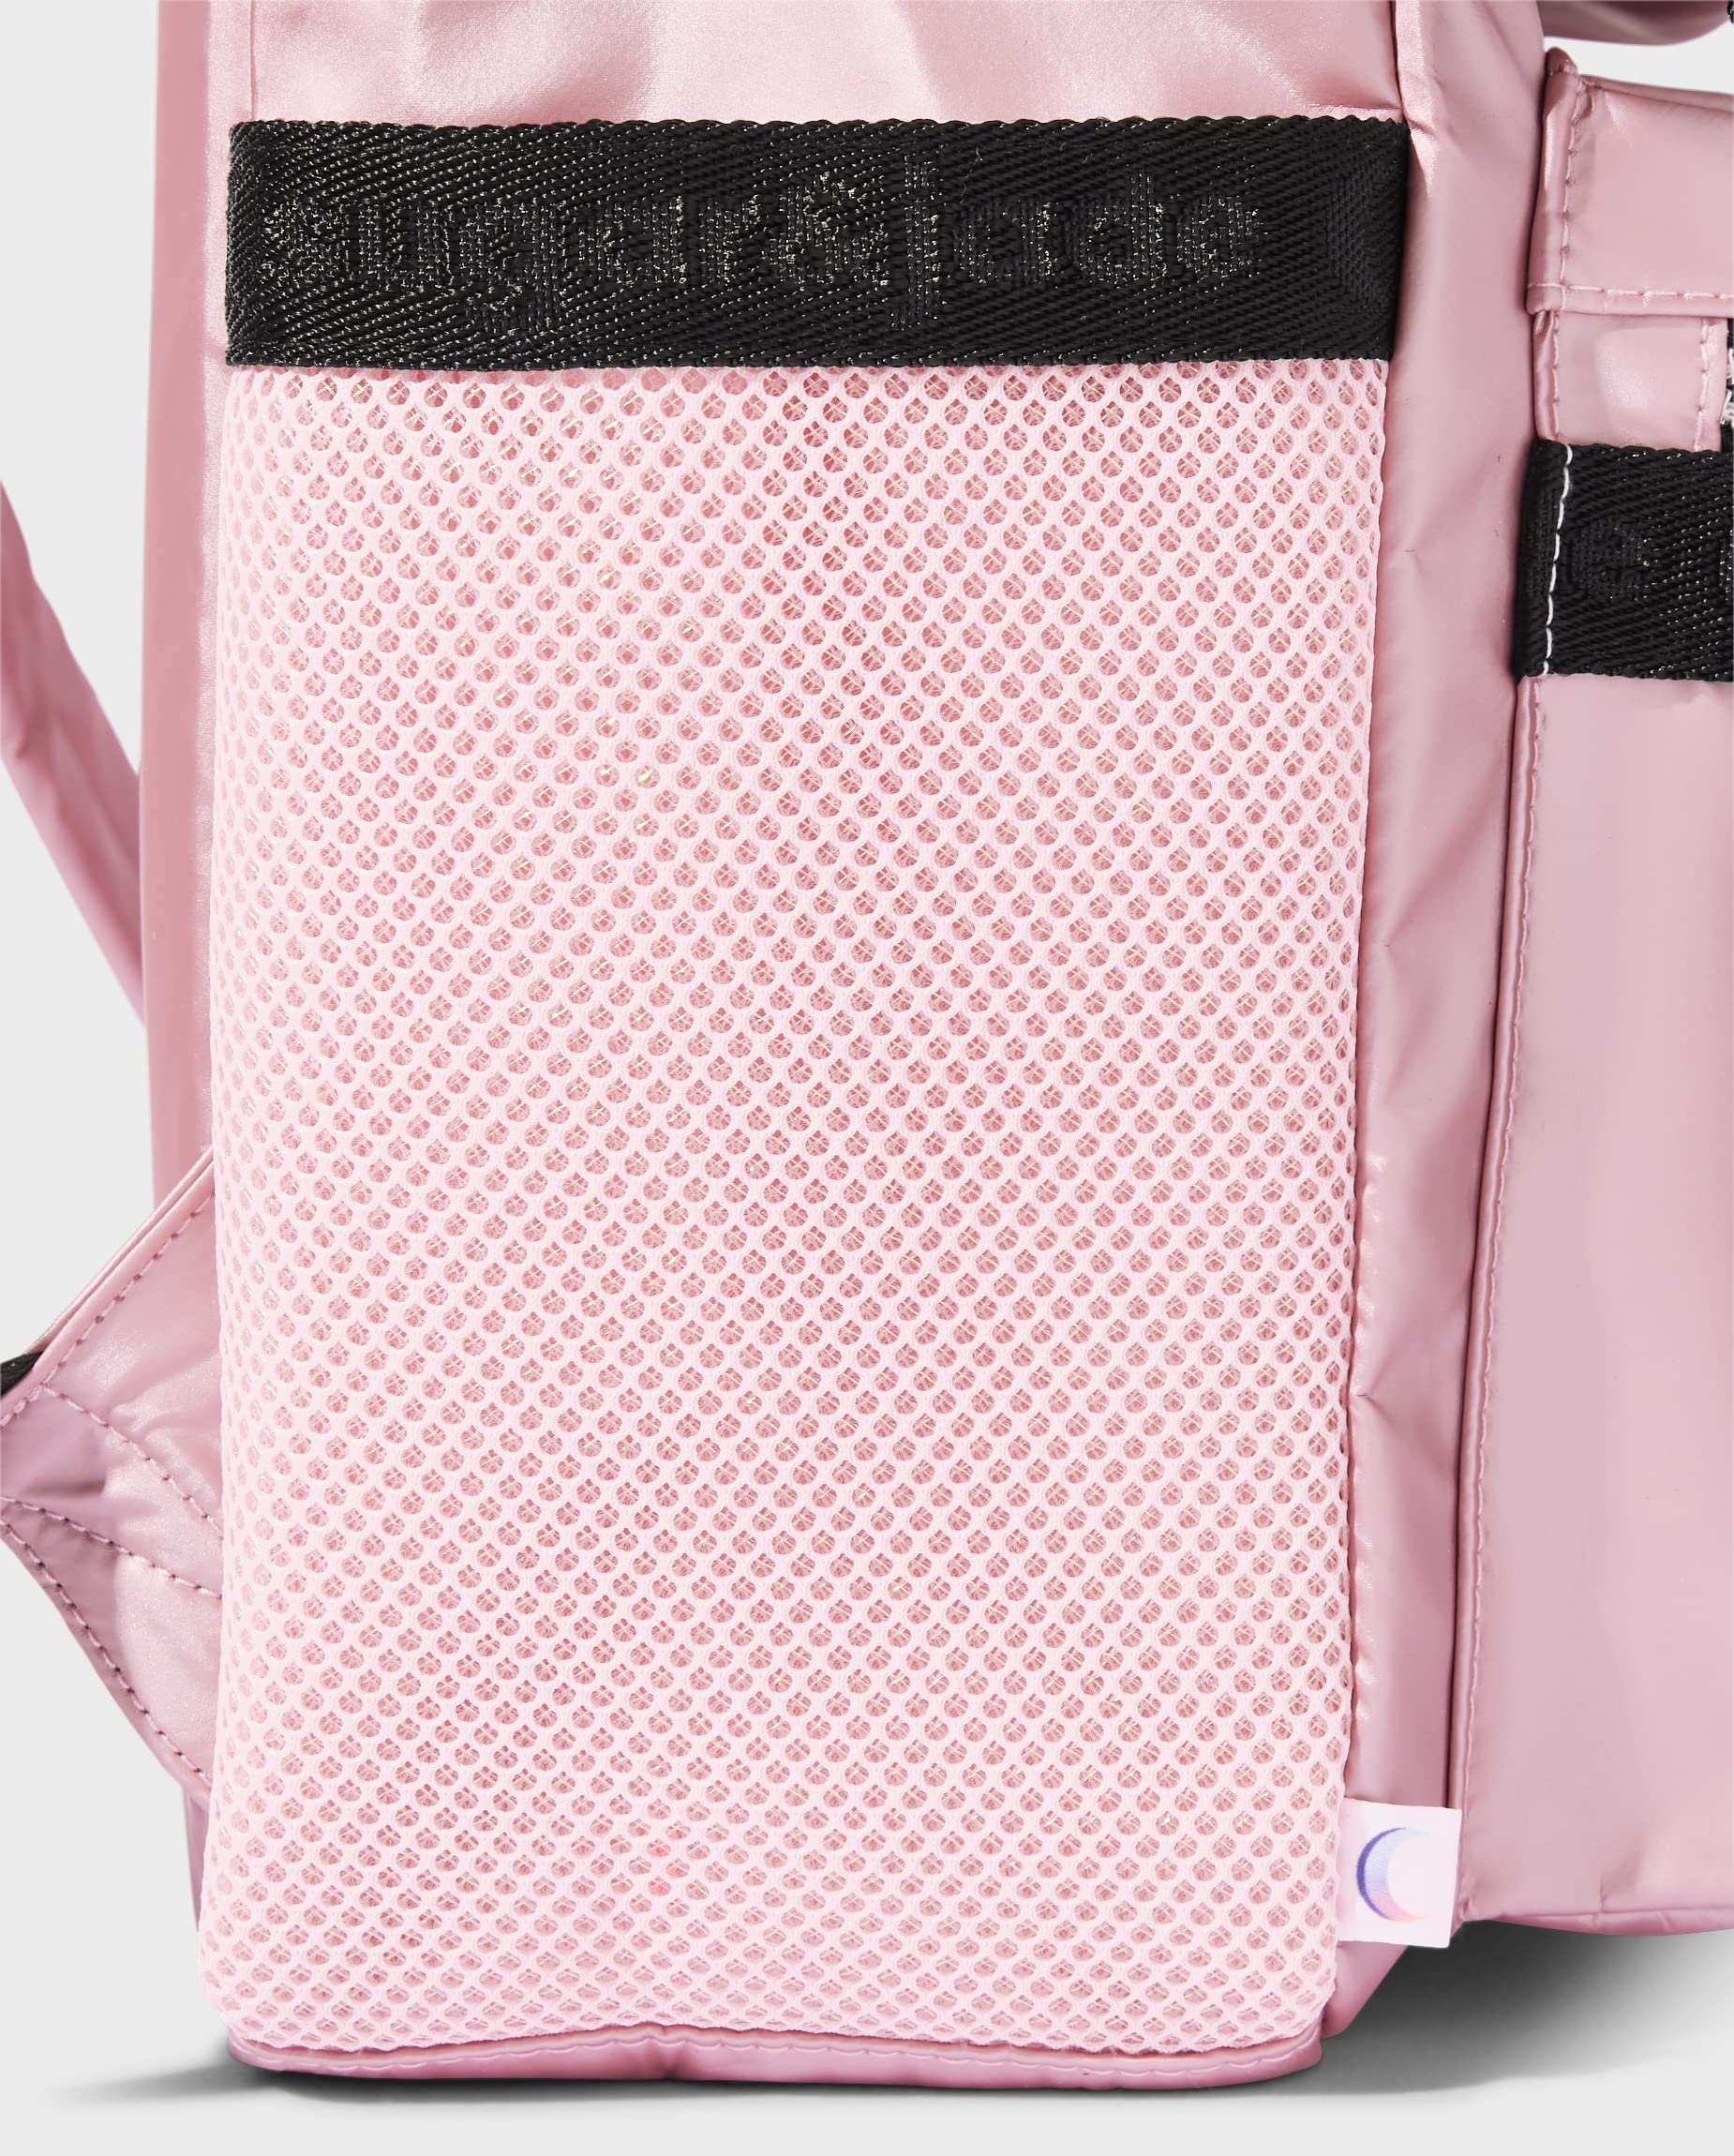 Sugar & Jade Girls' Teen Back to School, Full, Fashion Backpack, Pink/Black, One Size